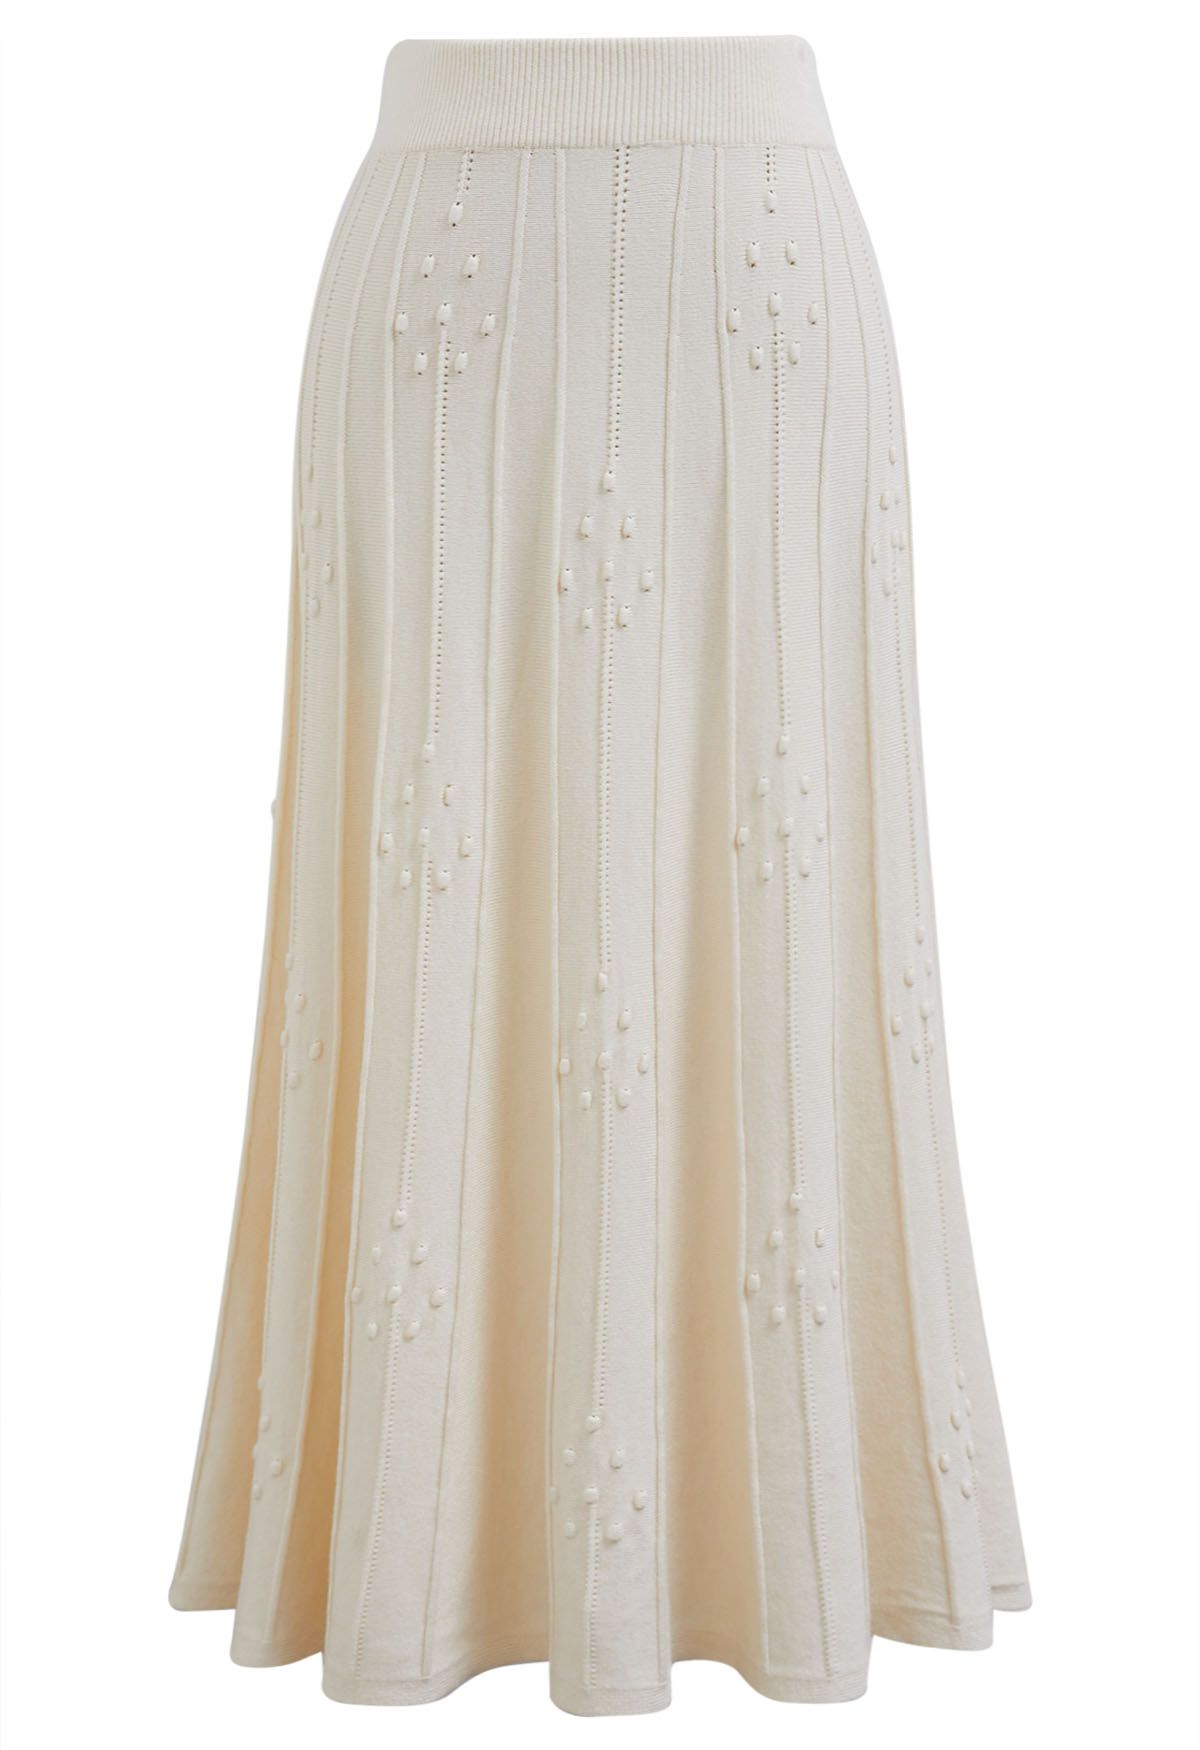 Embossed Dots Seam Knit Midi Skirt in Cream